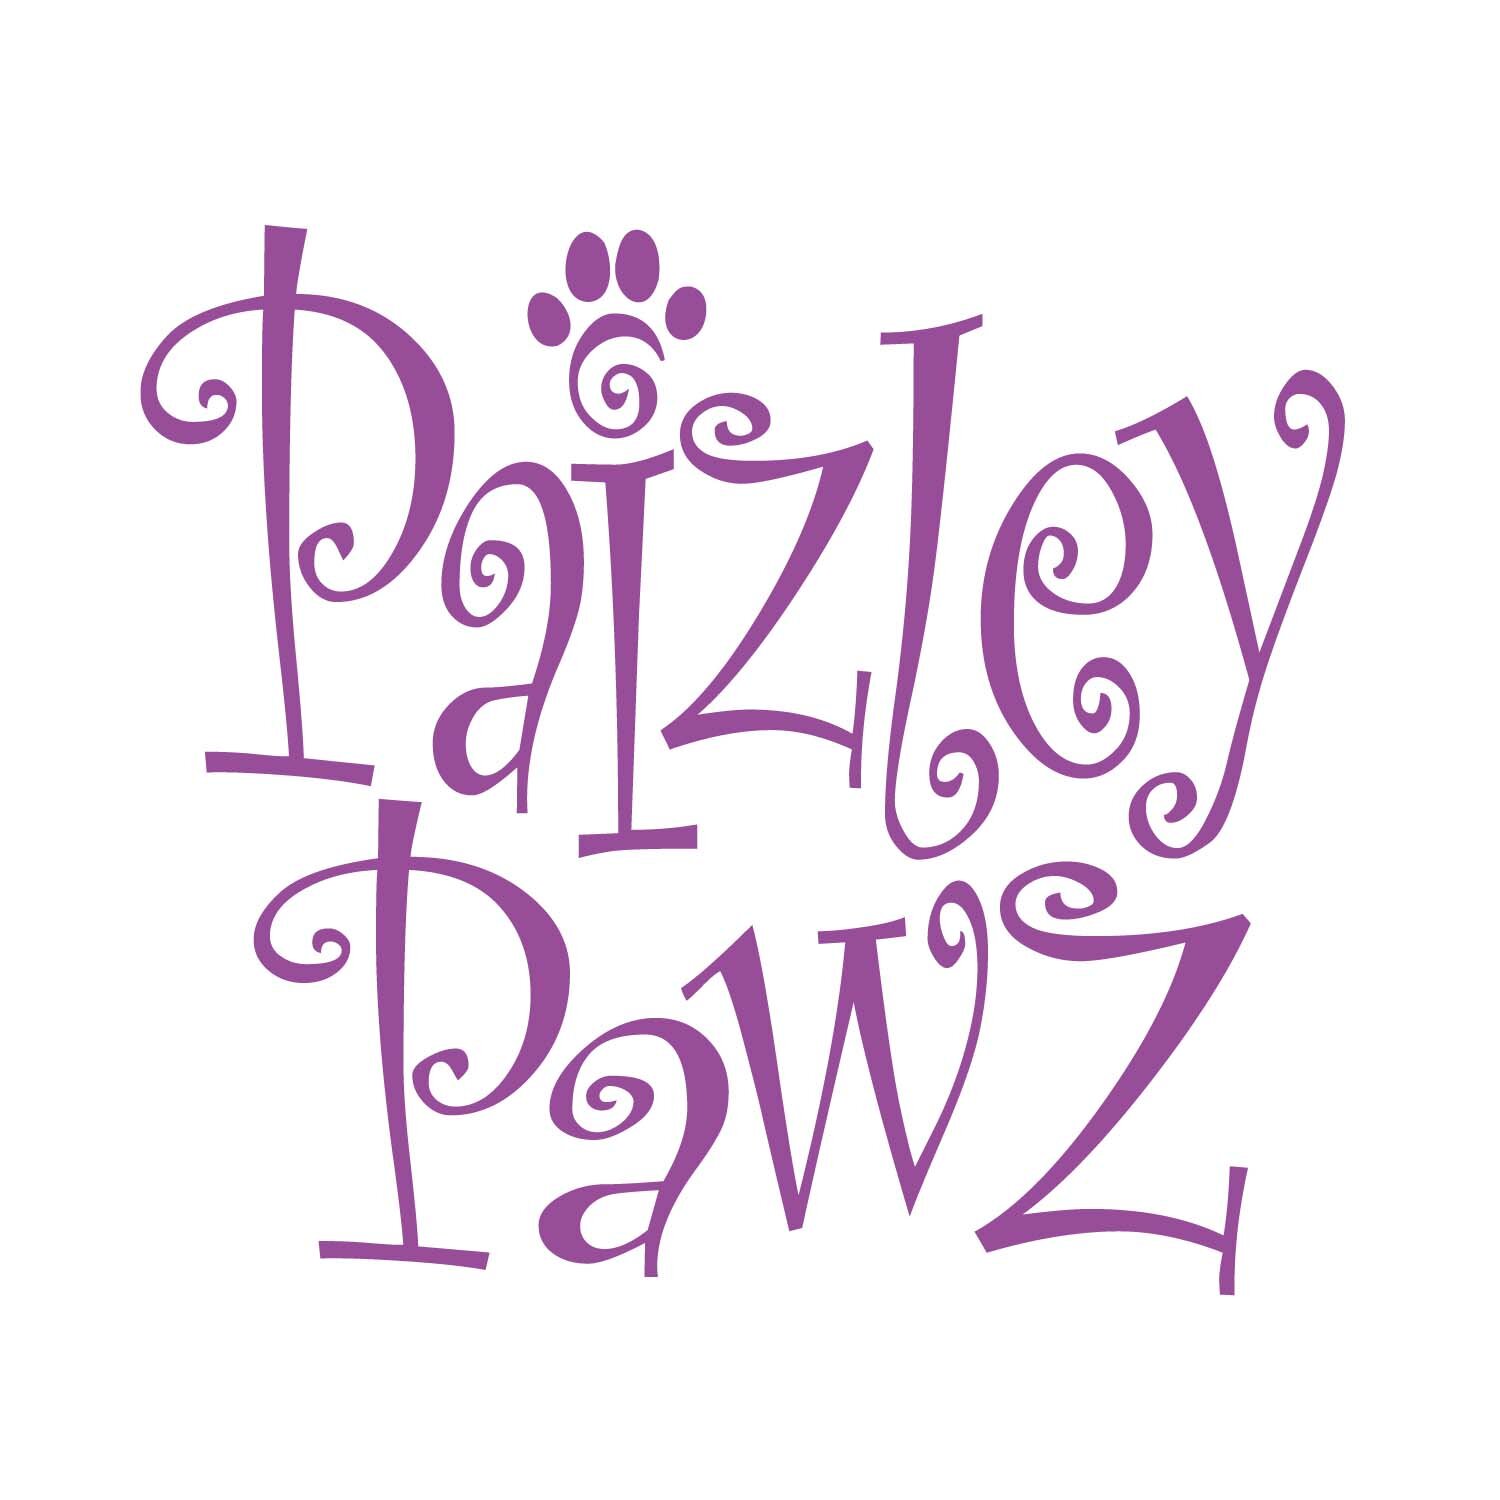 Paizley Pawz